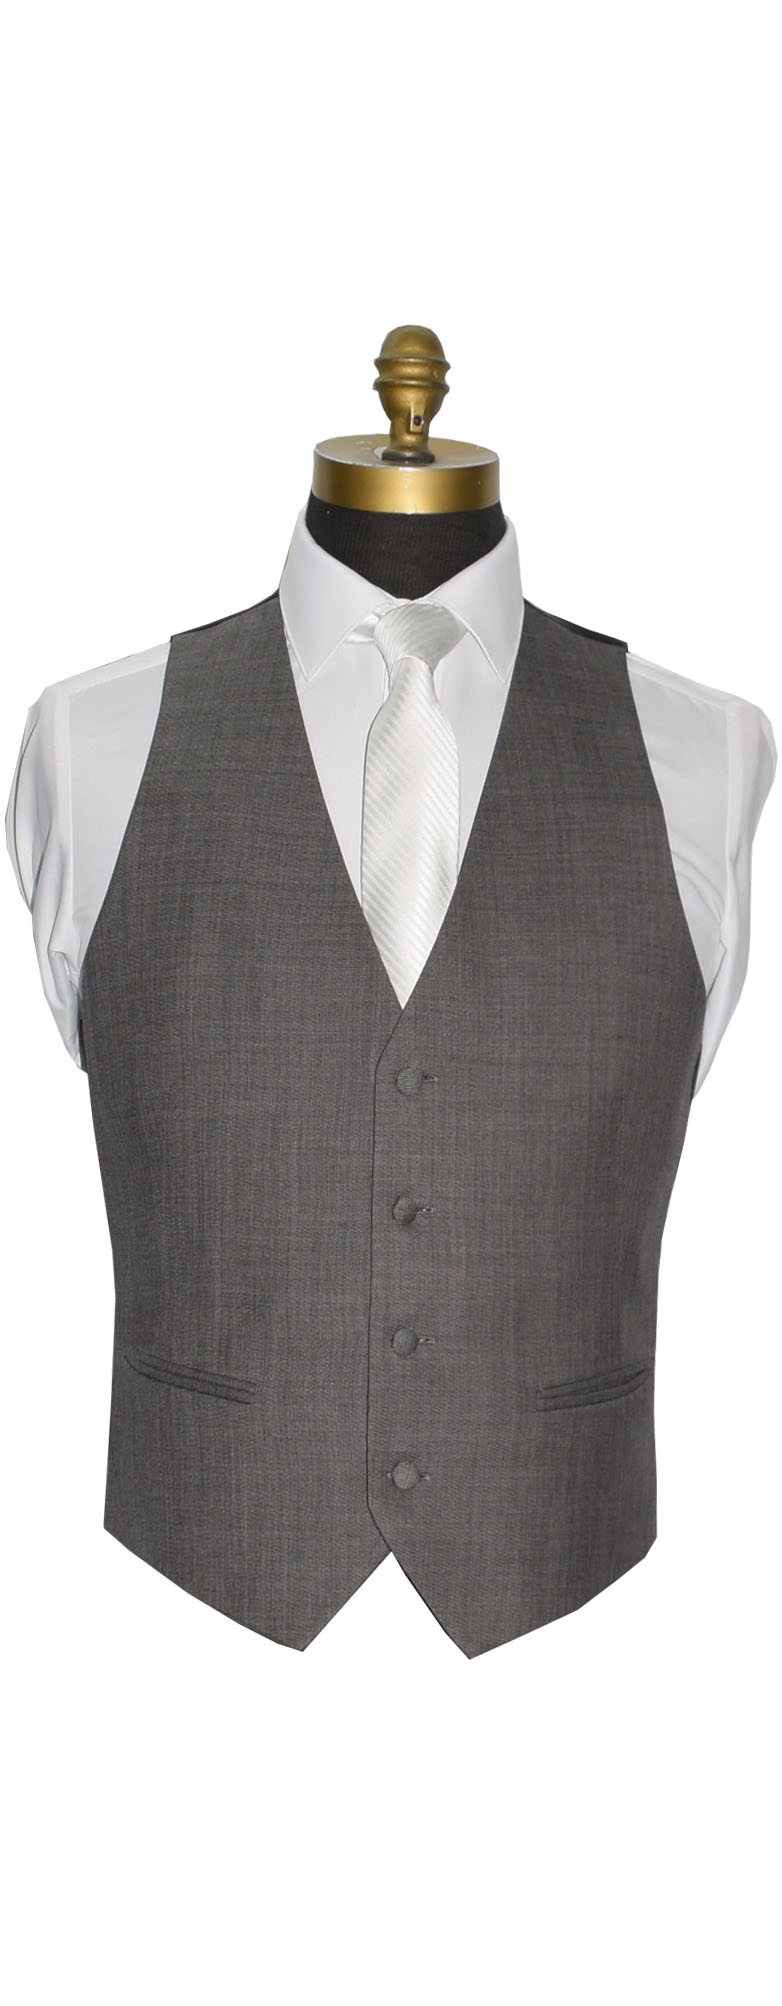 Used Sharkskin Gray Suit Vest